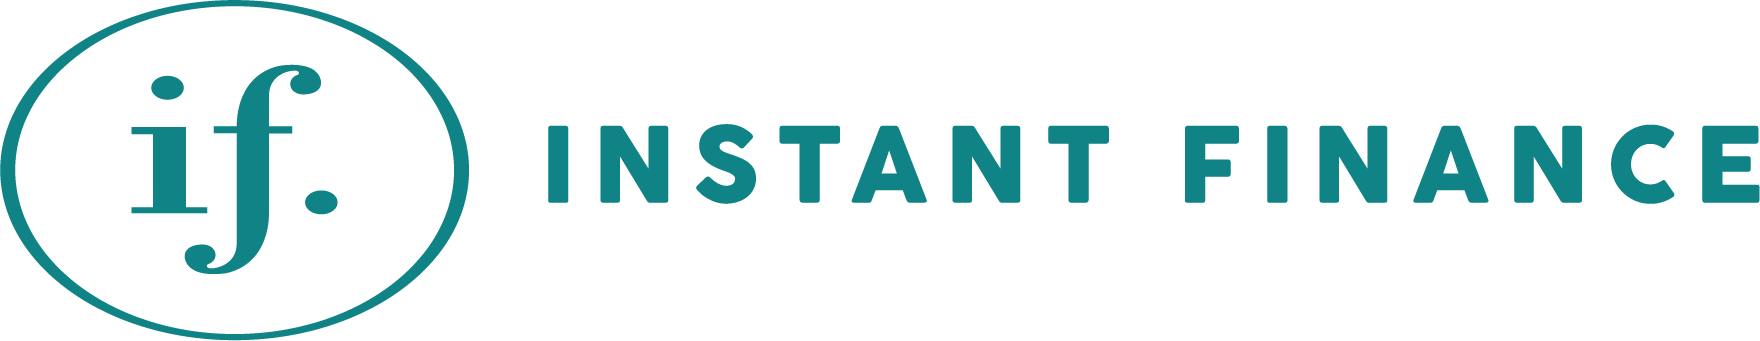 Instant Finance logo 